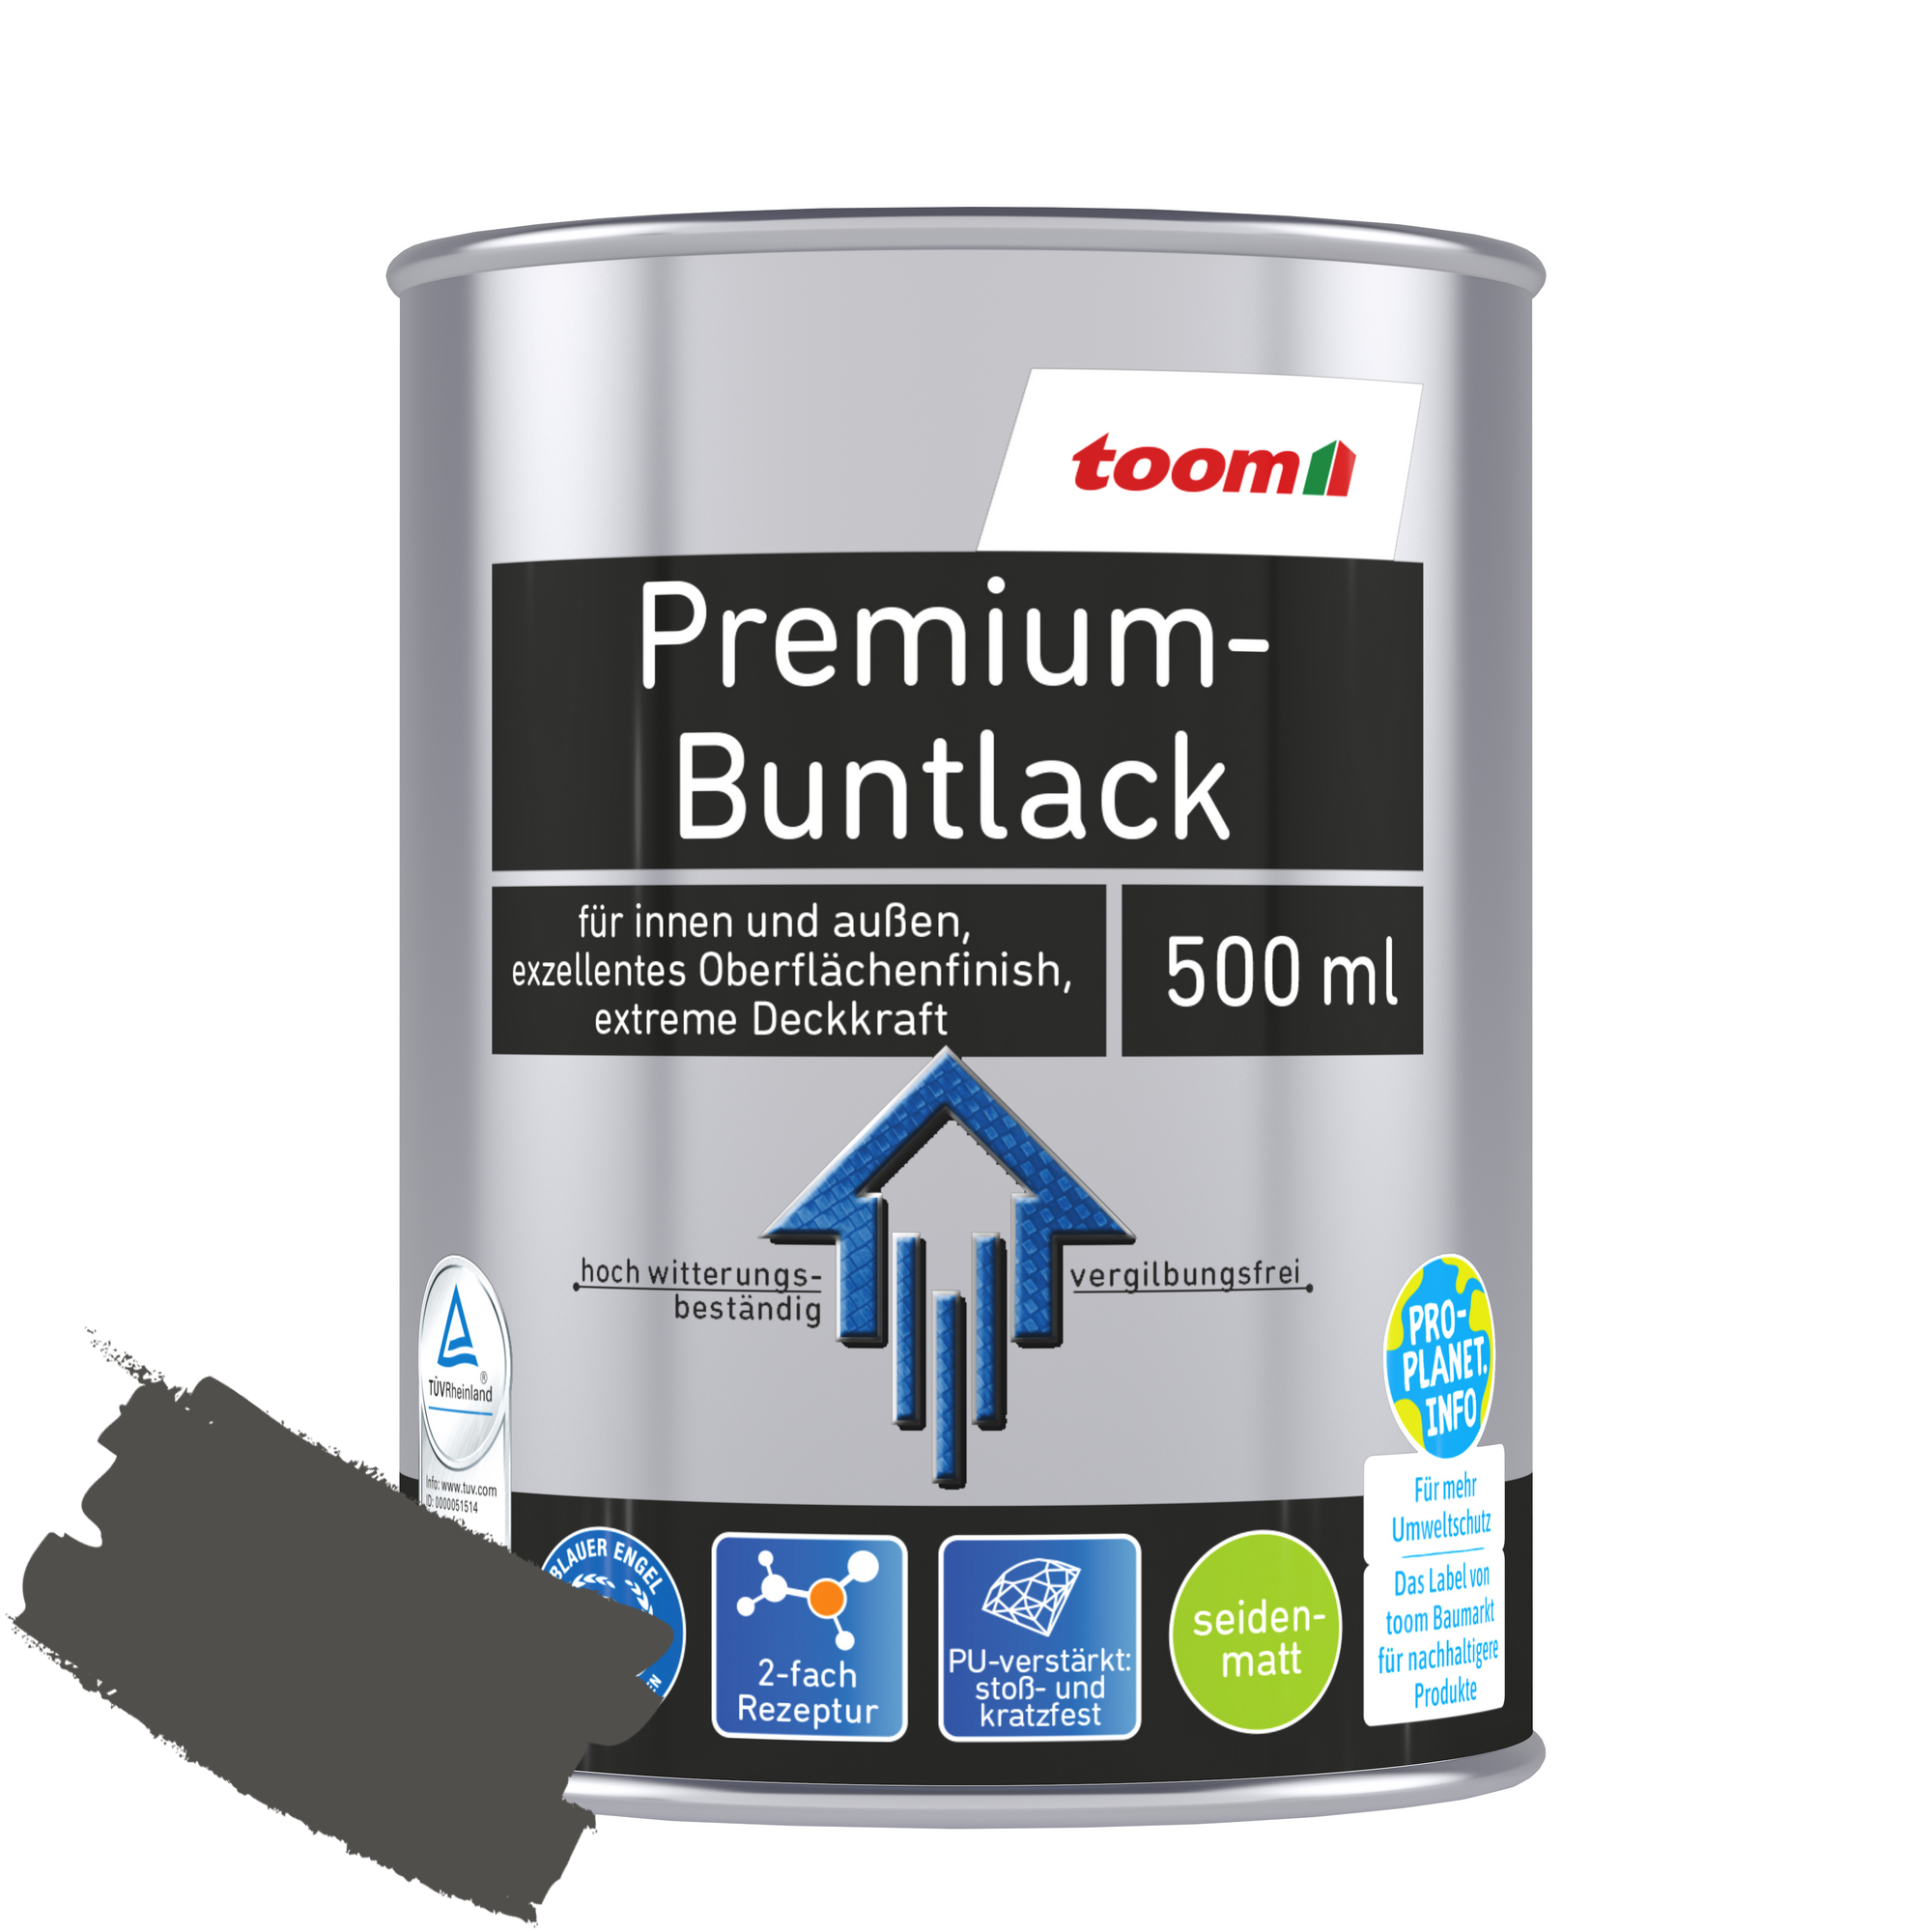 Premium-Buntlack silberfarben seidenmatt 500 ml + product picture